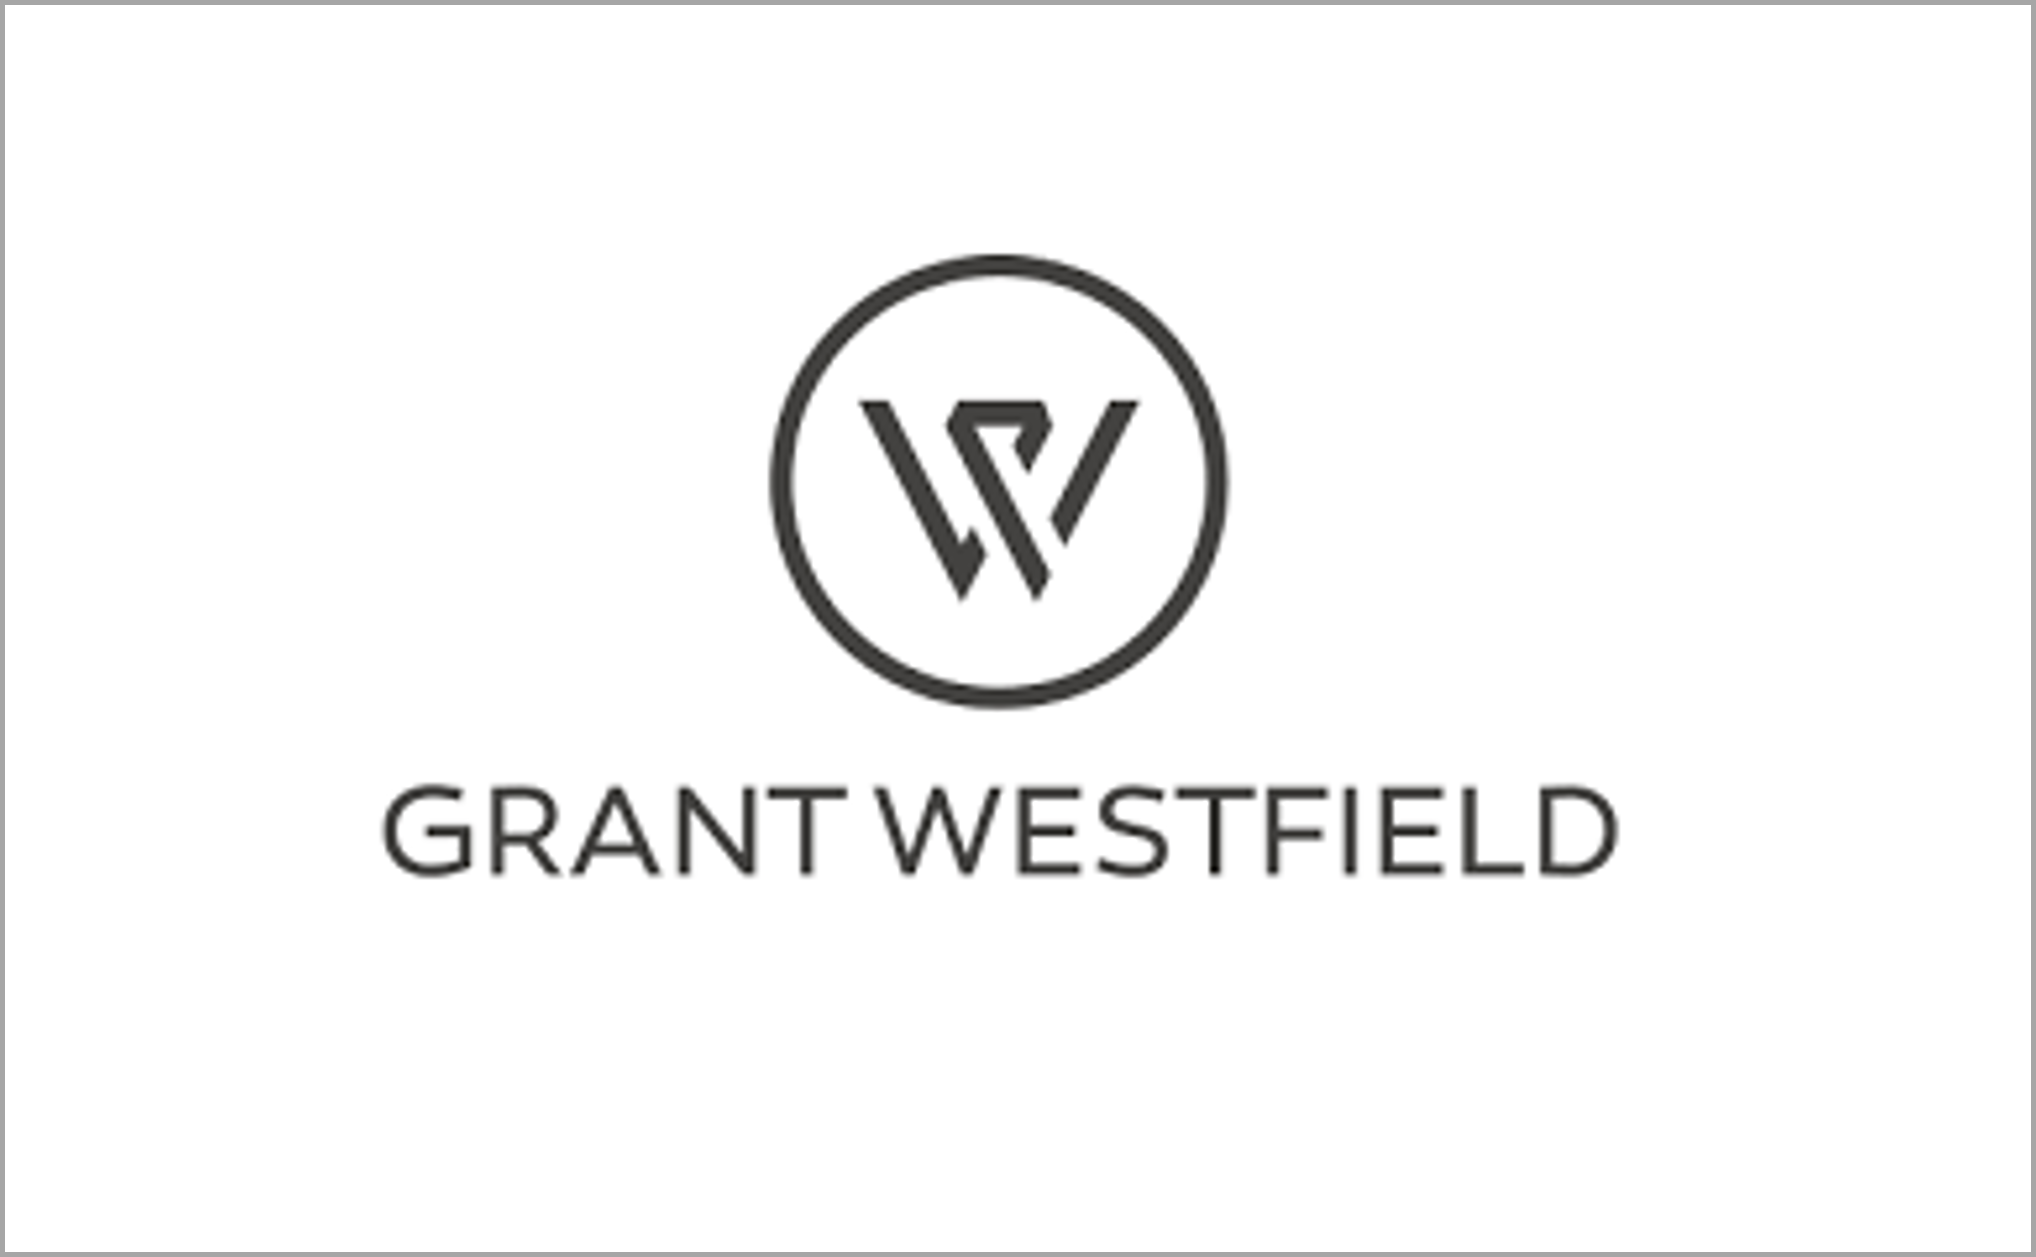 Grant Westfield